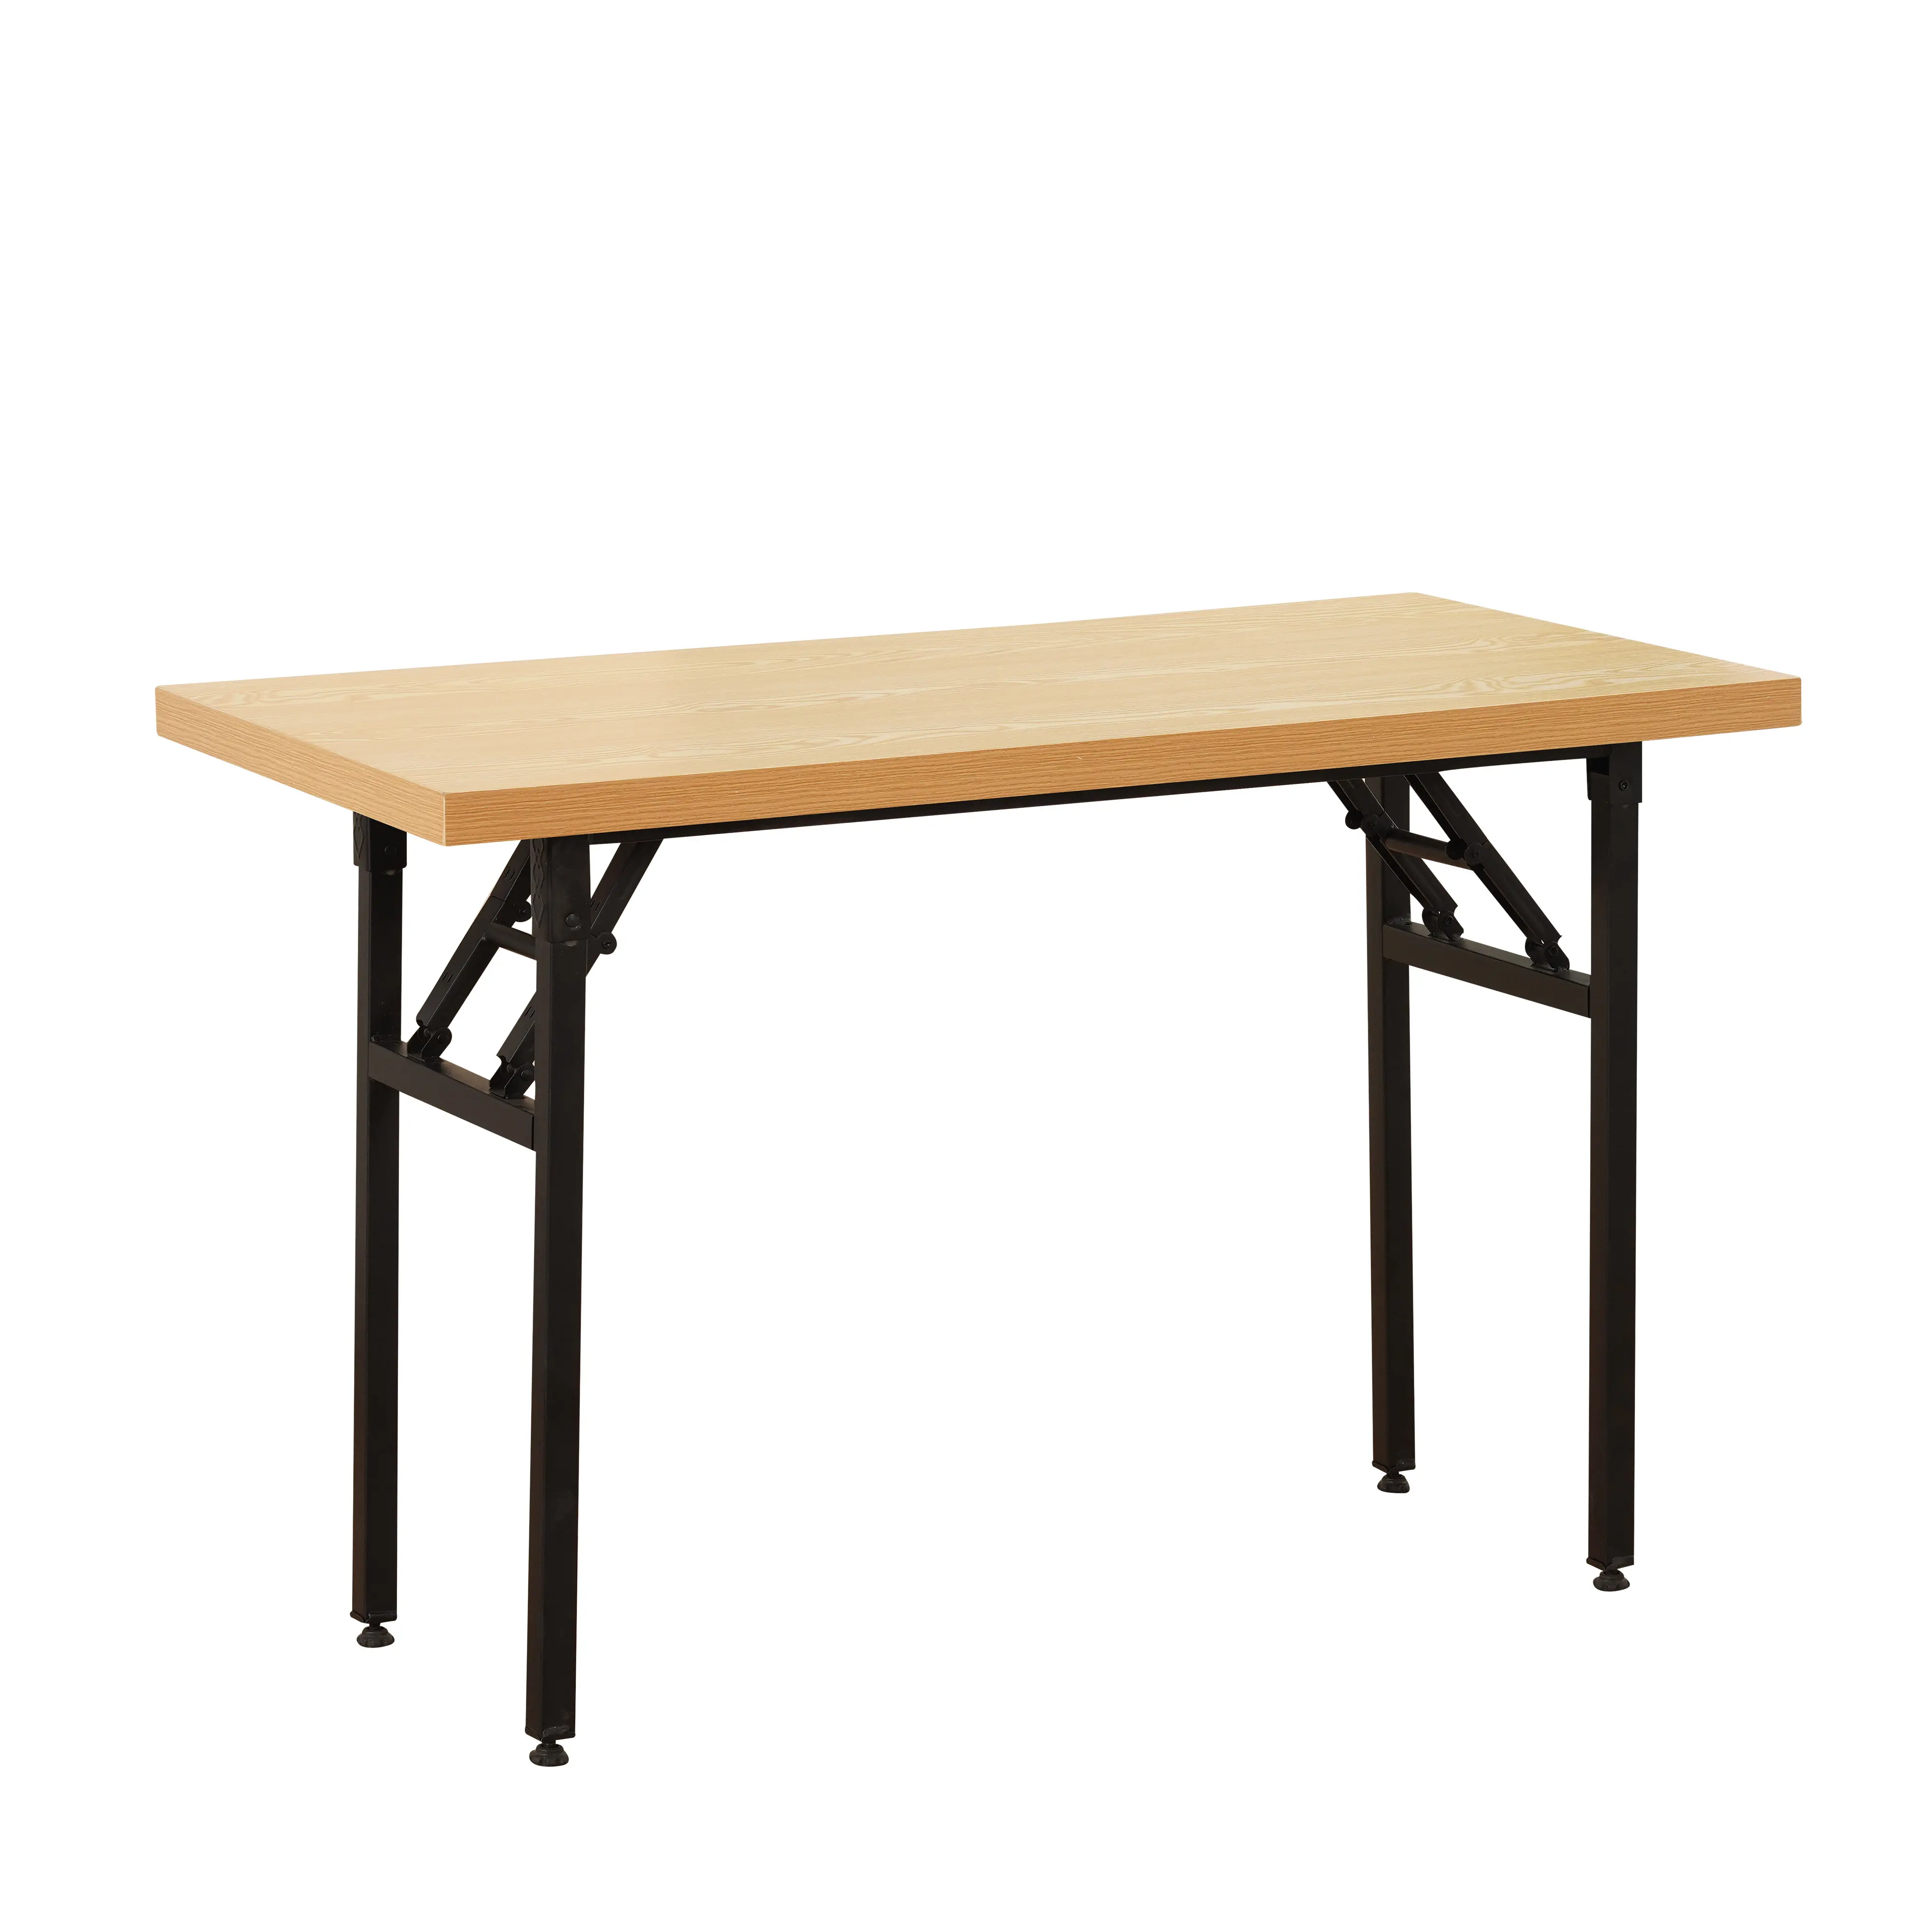 हॉट सेल्स आधुनिक सरल डिजाइन जगह बचाने वाला लकड़ी का छोटा डेस्क, बिना असेंबली वाला फोल्डेबल राइटिंग टेबल